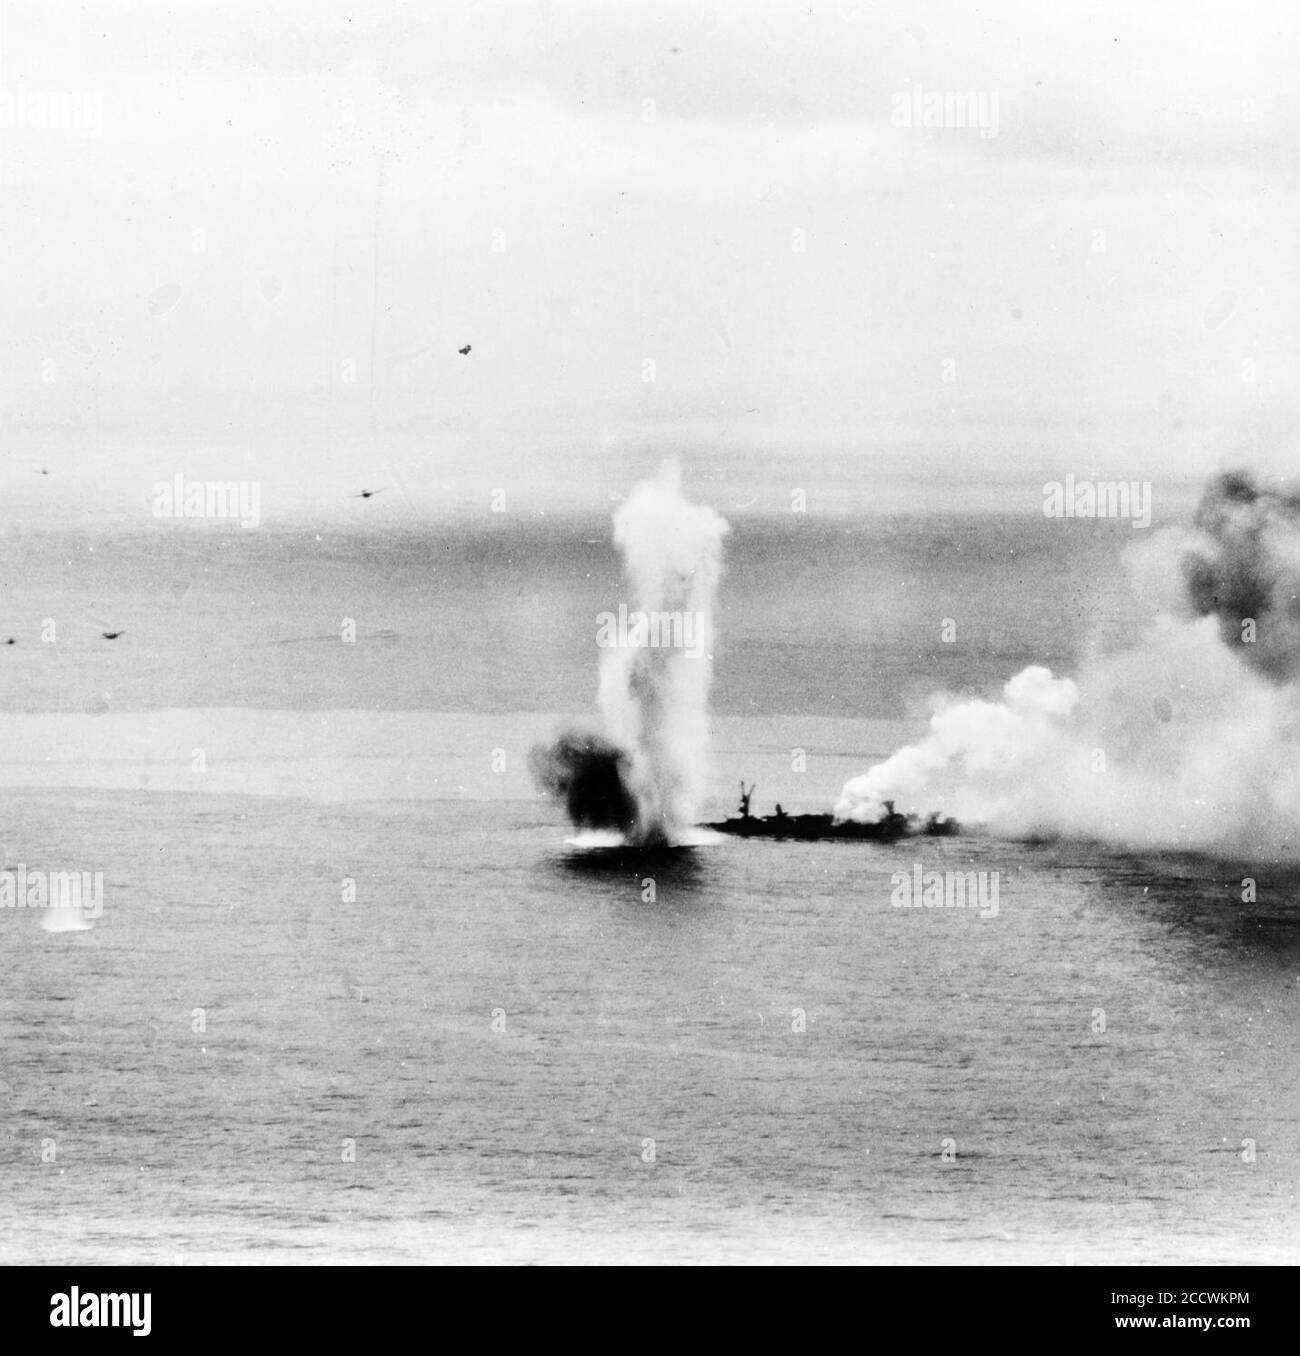 Japanese light cruiser Yahagi under attack and listing heavily, 7 April 1945 (NH 62575). Stock Photo